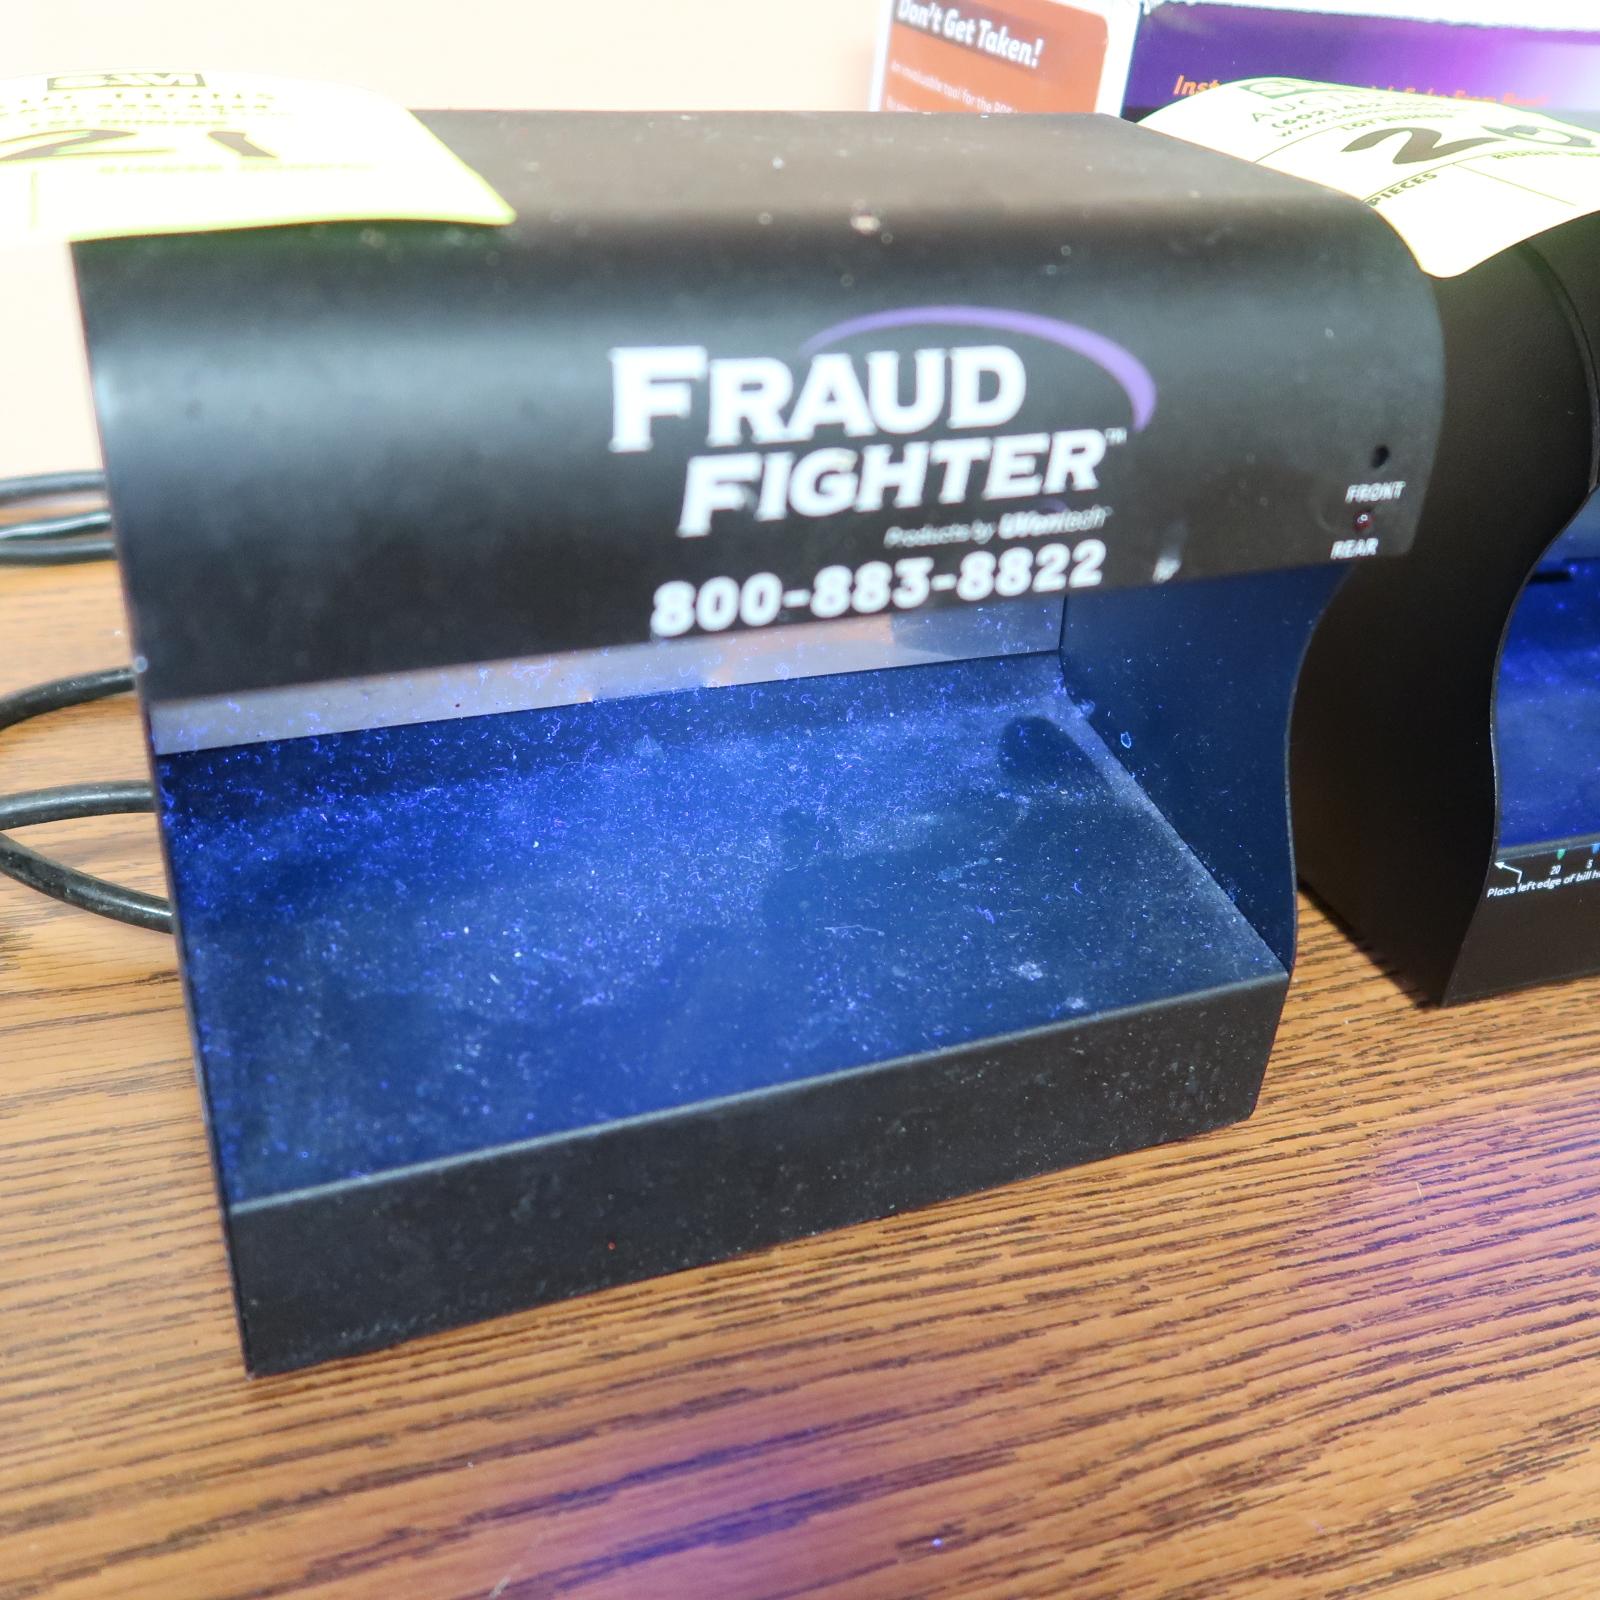 Fraud Fighter UV counterfeit detection scanner